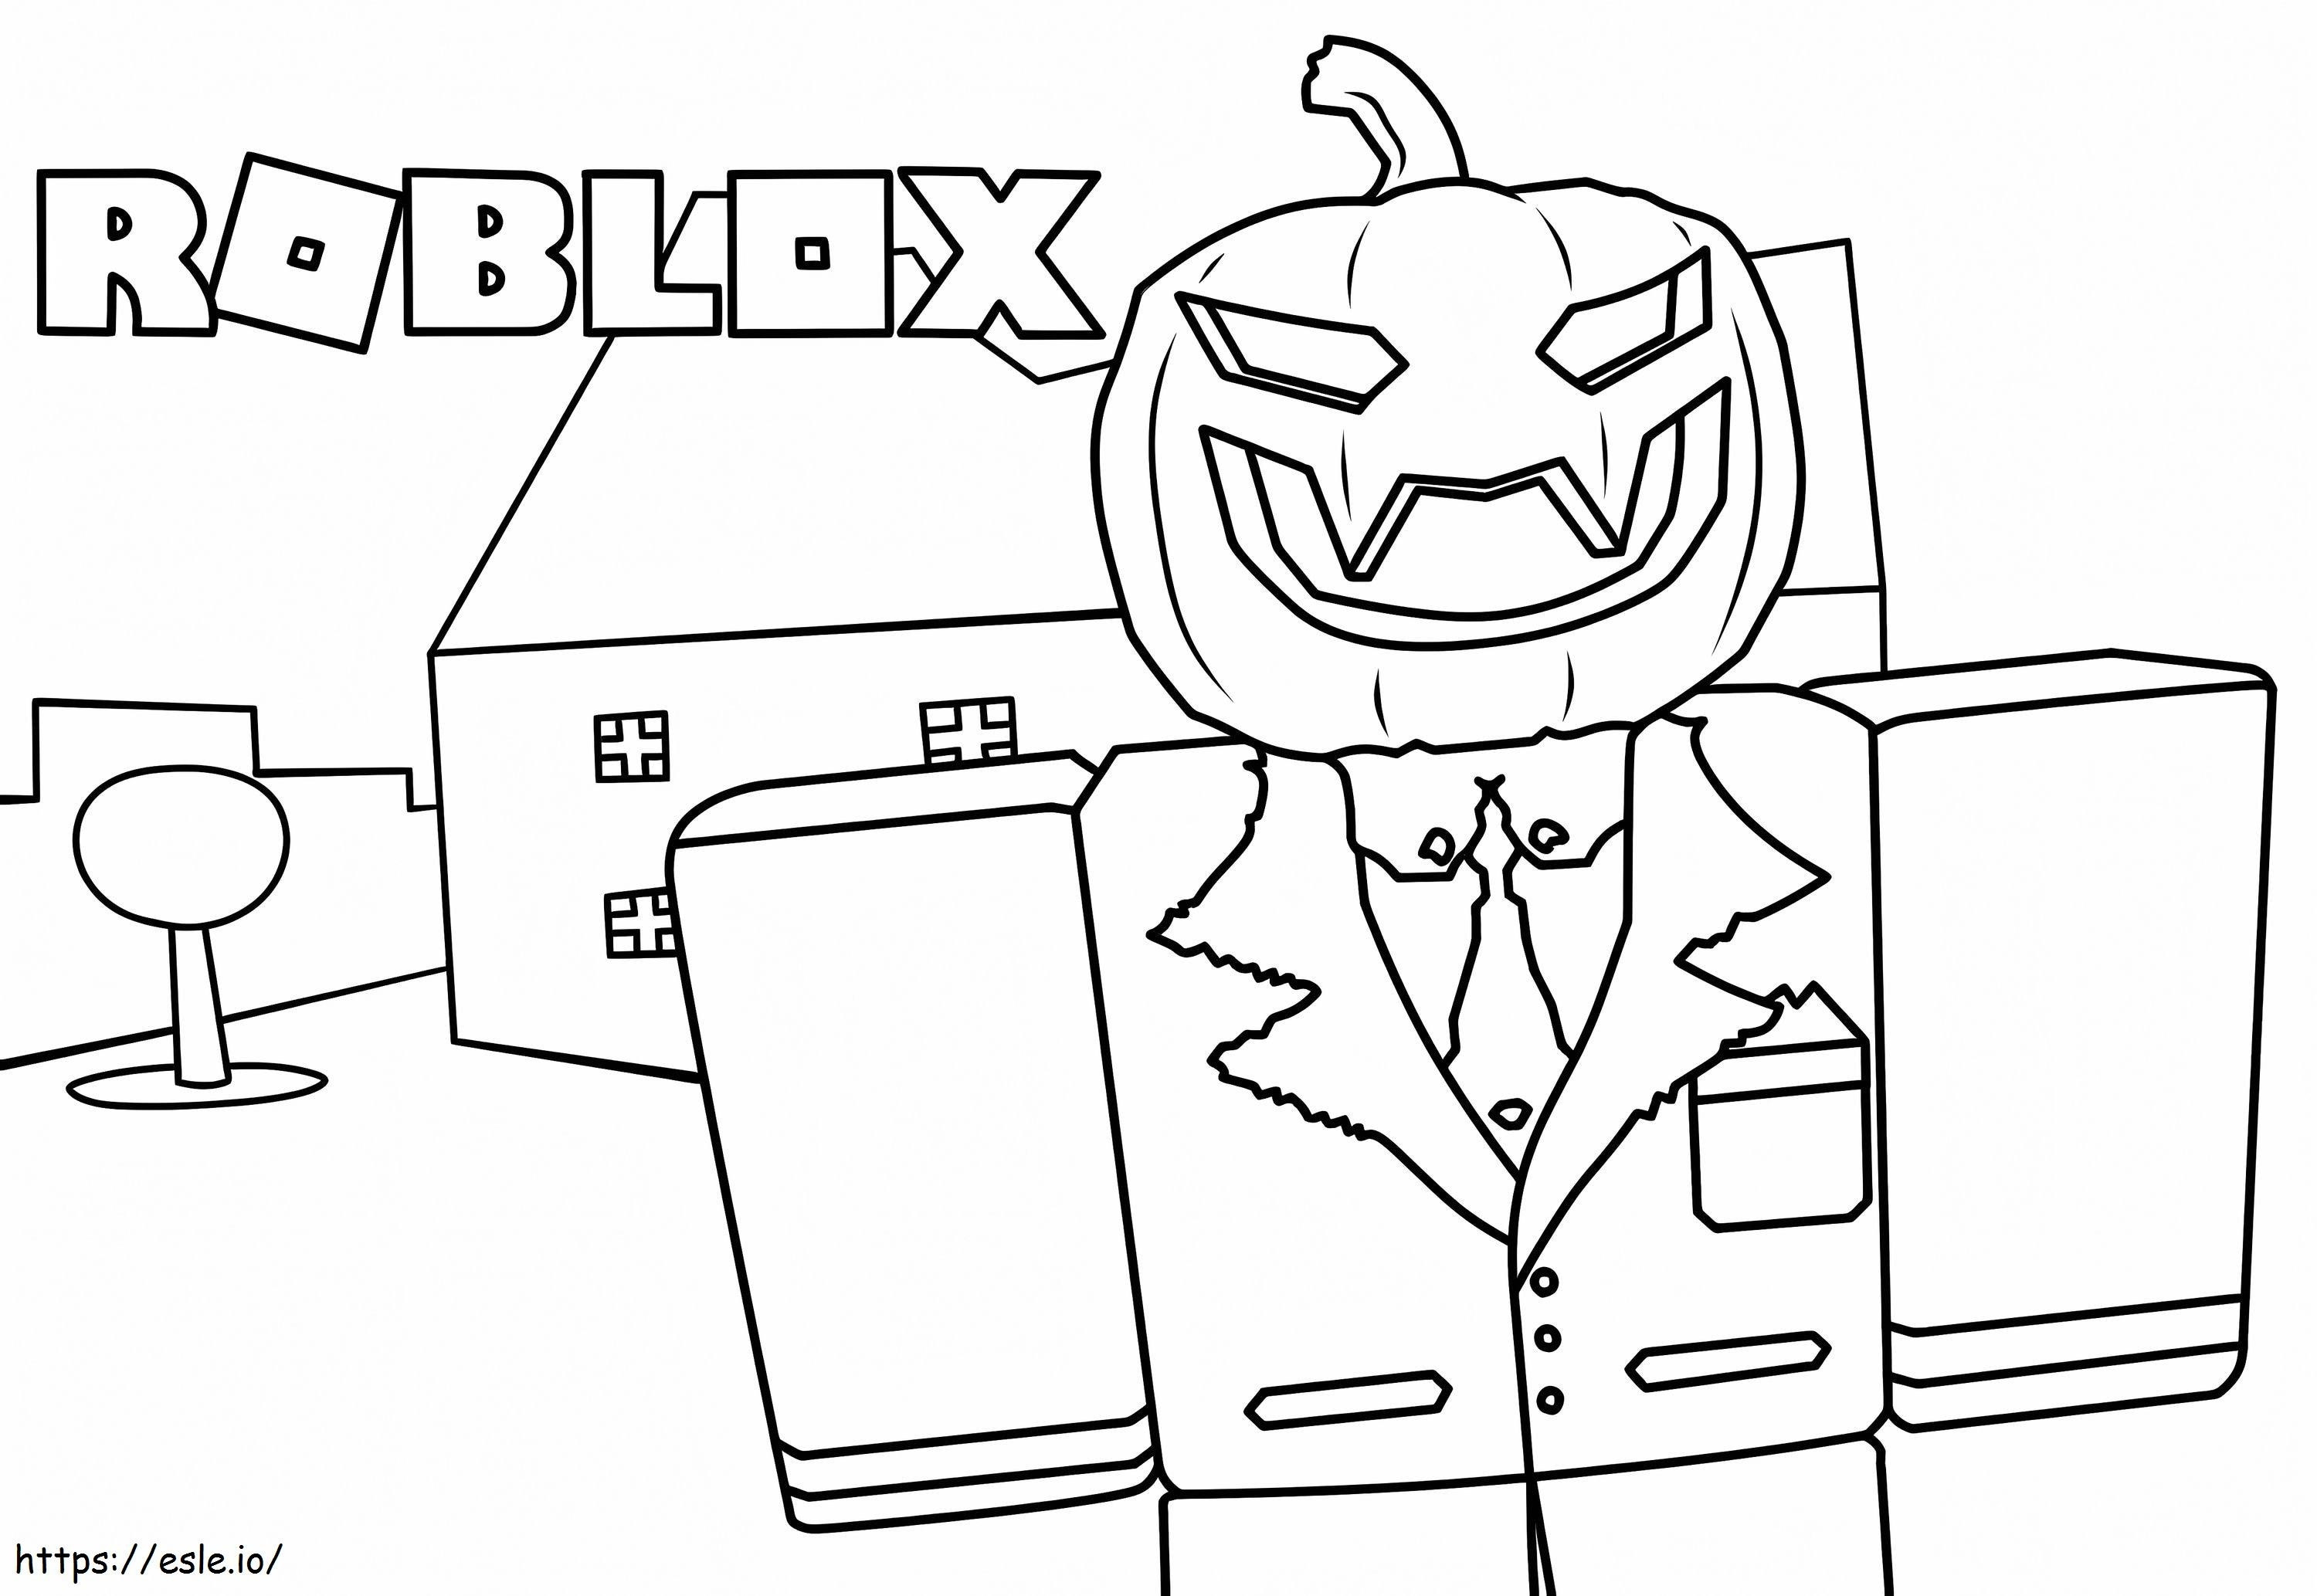 Coloriage Roblox L'Halloween à imprimer dessin